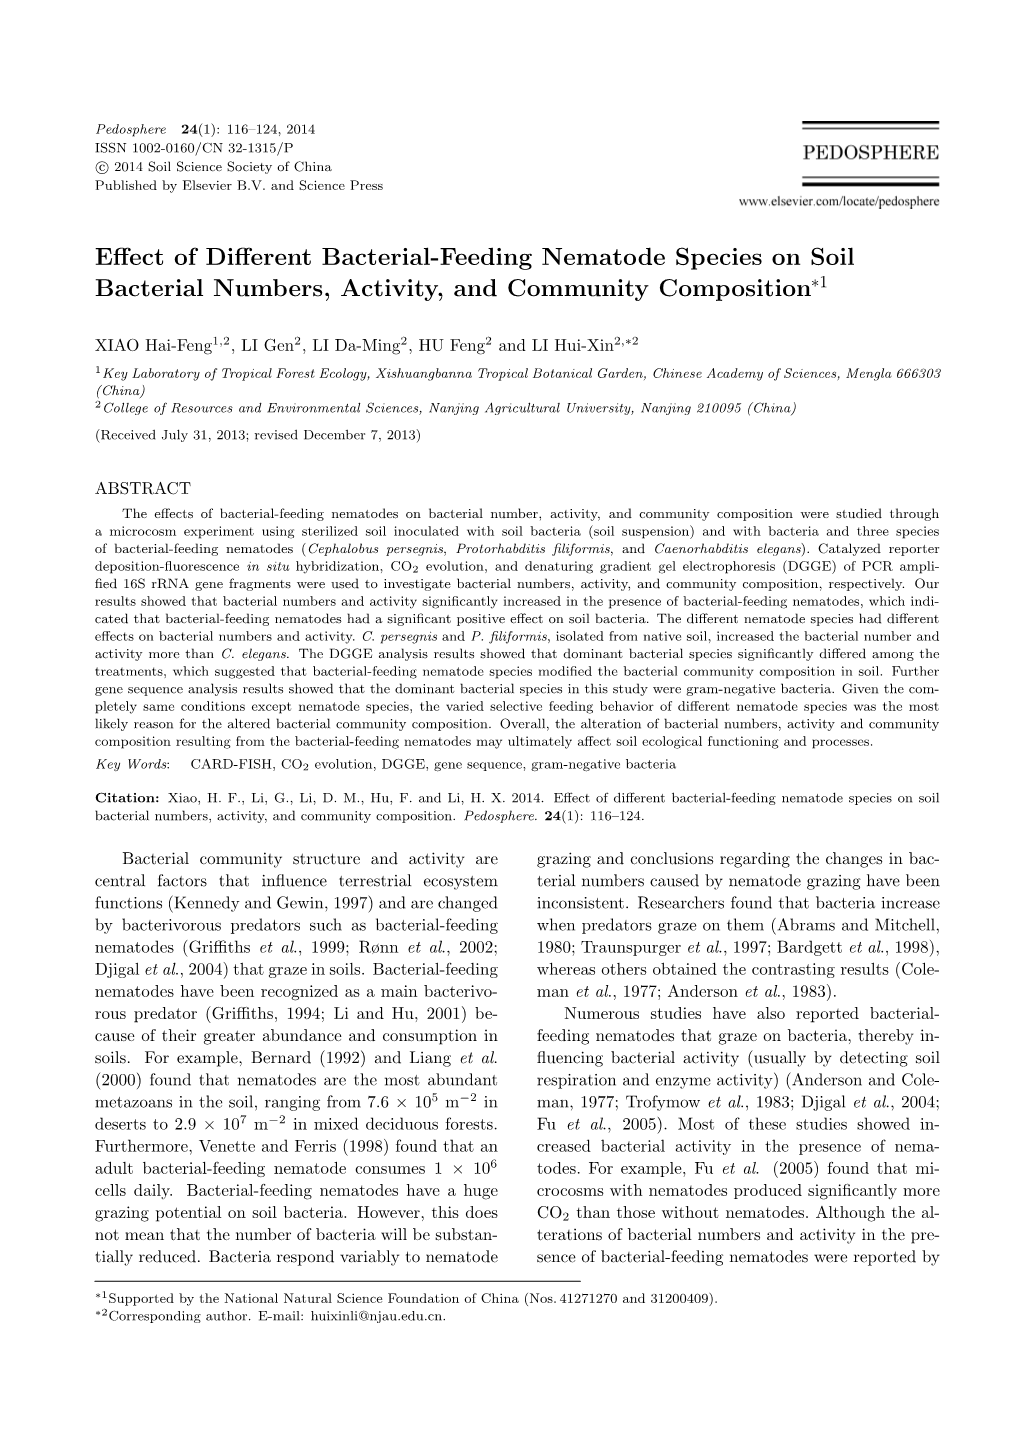 Effect of Different Bacterial-Feeding Nematode Species on Soil